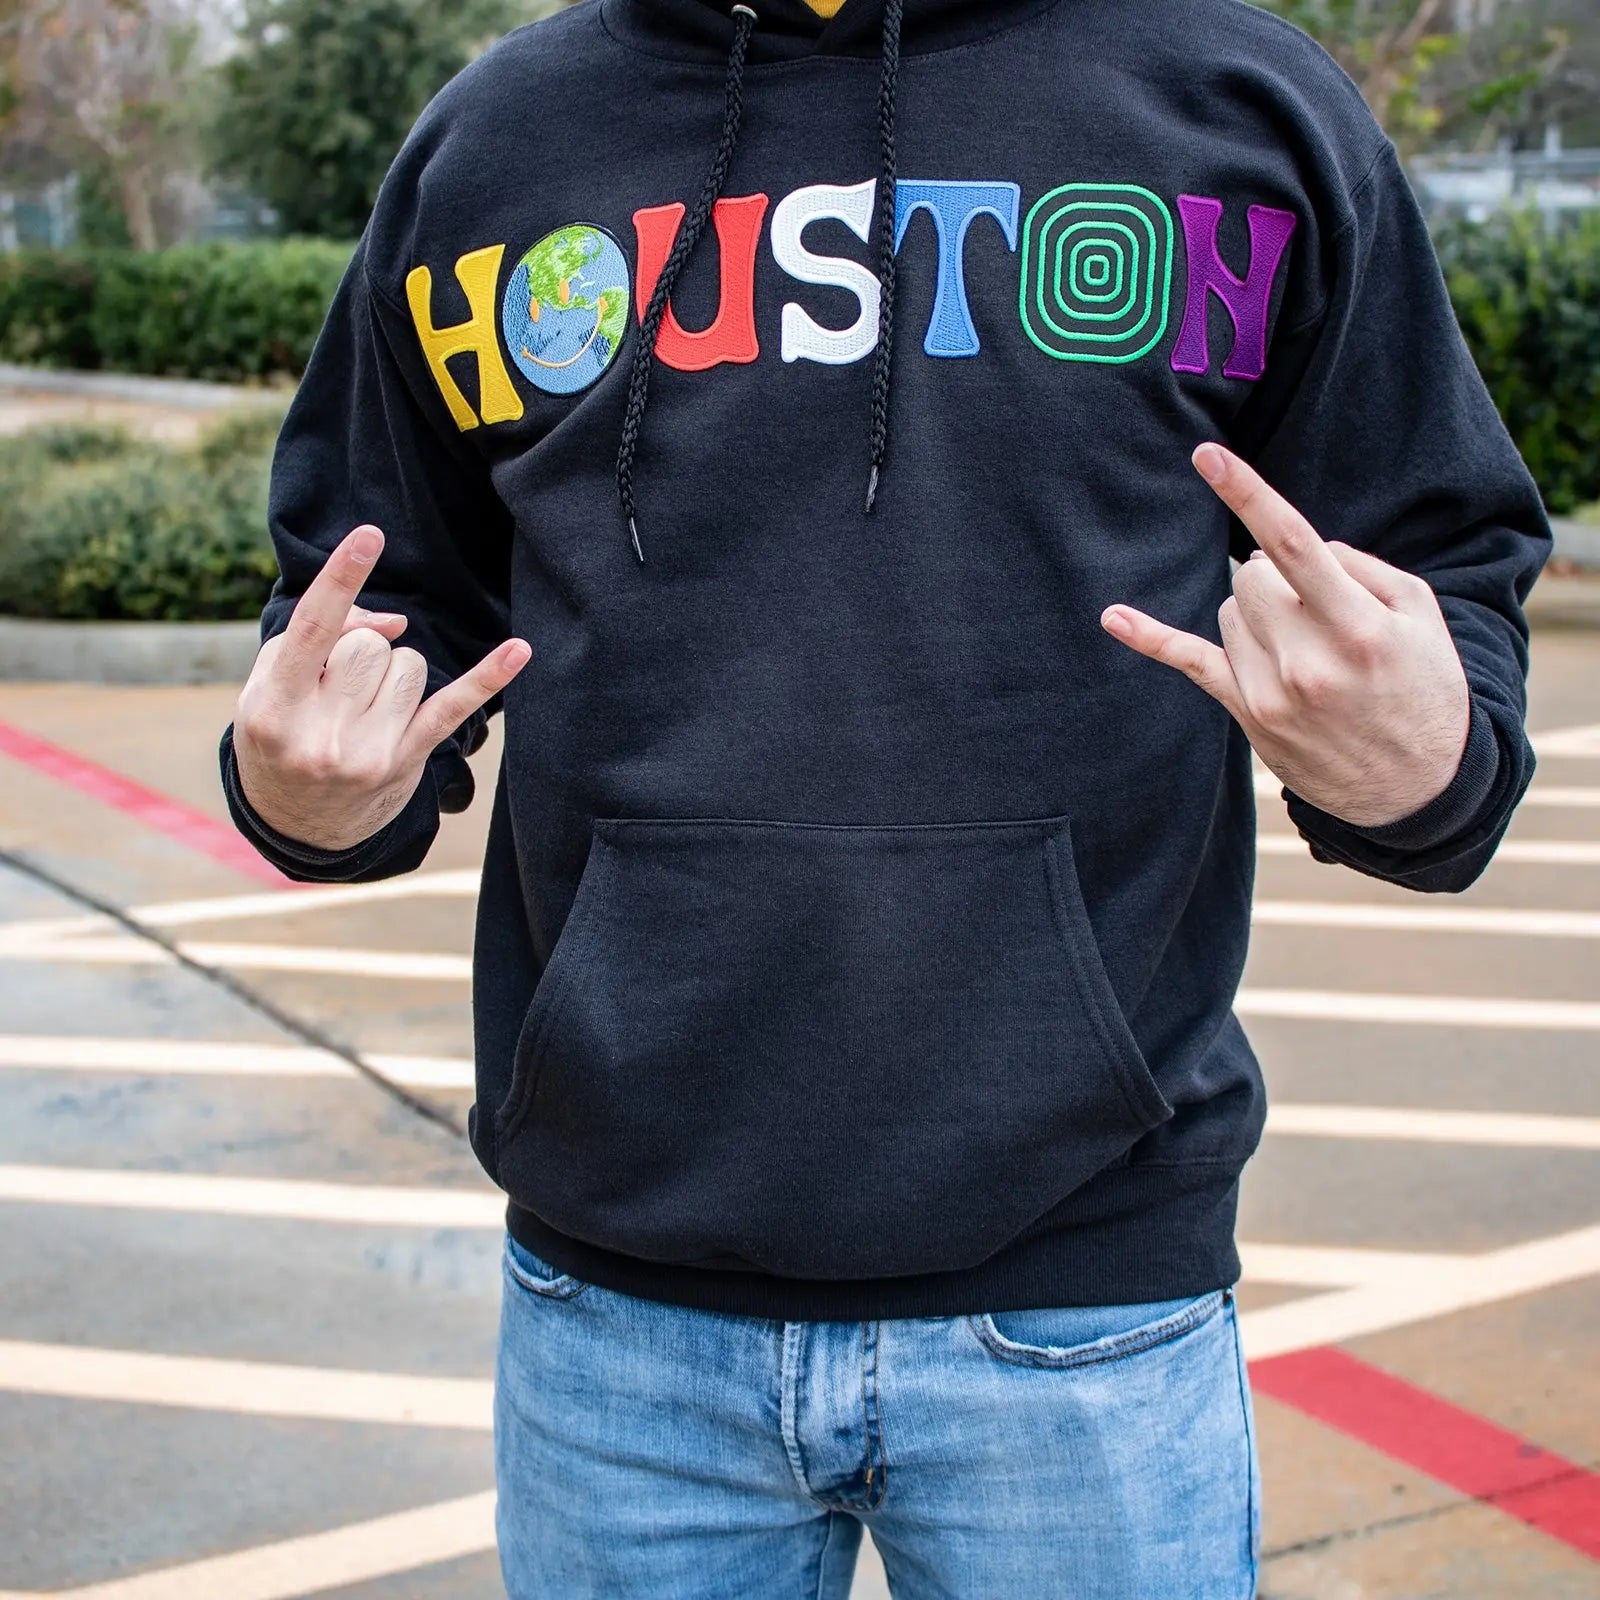 houston astros world series hoodie